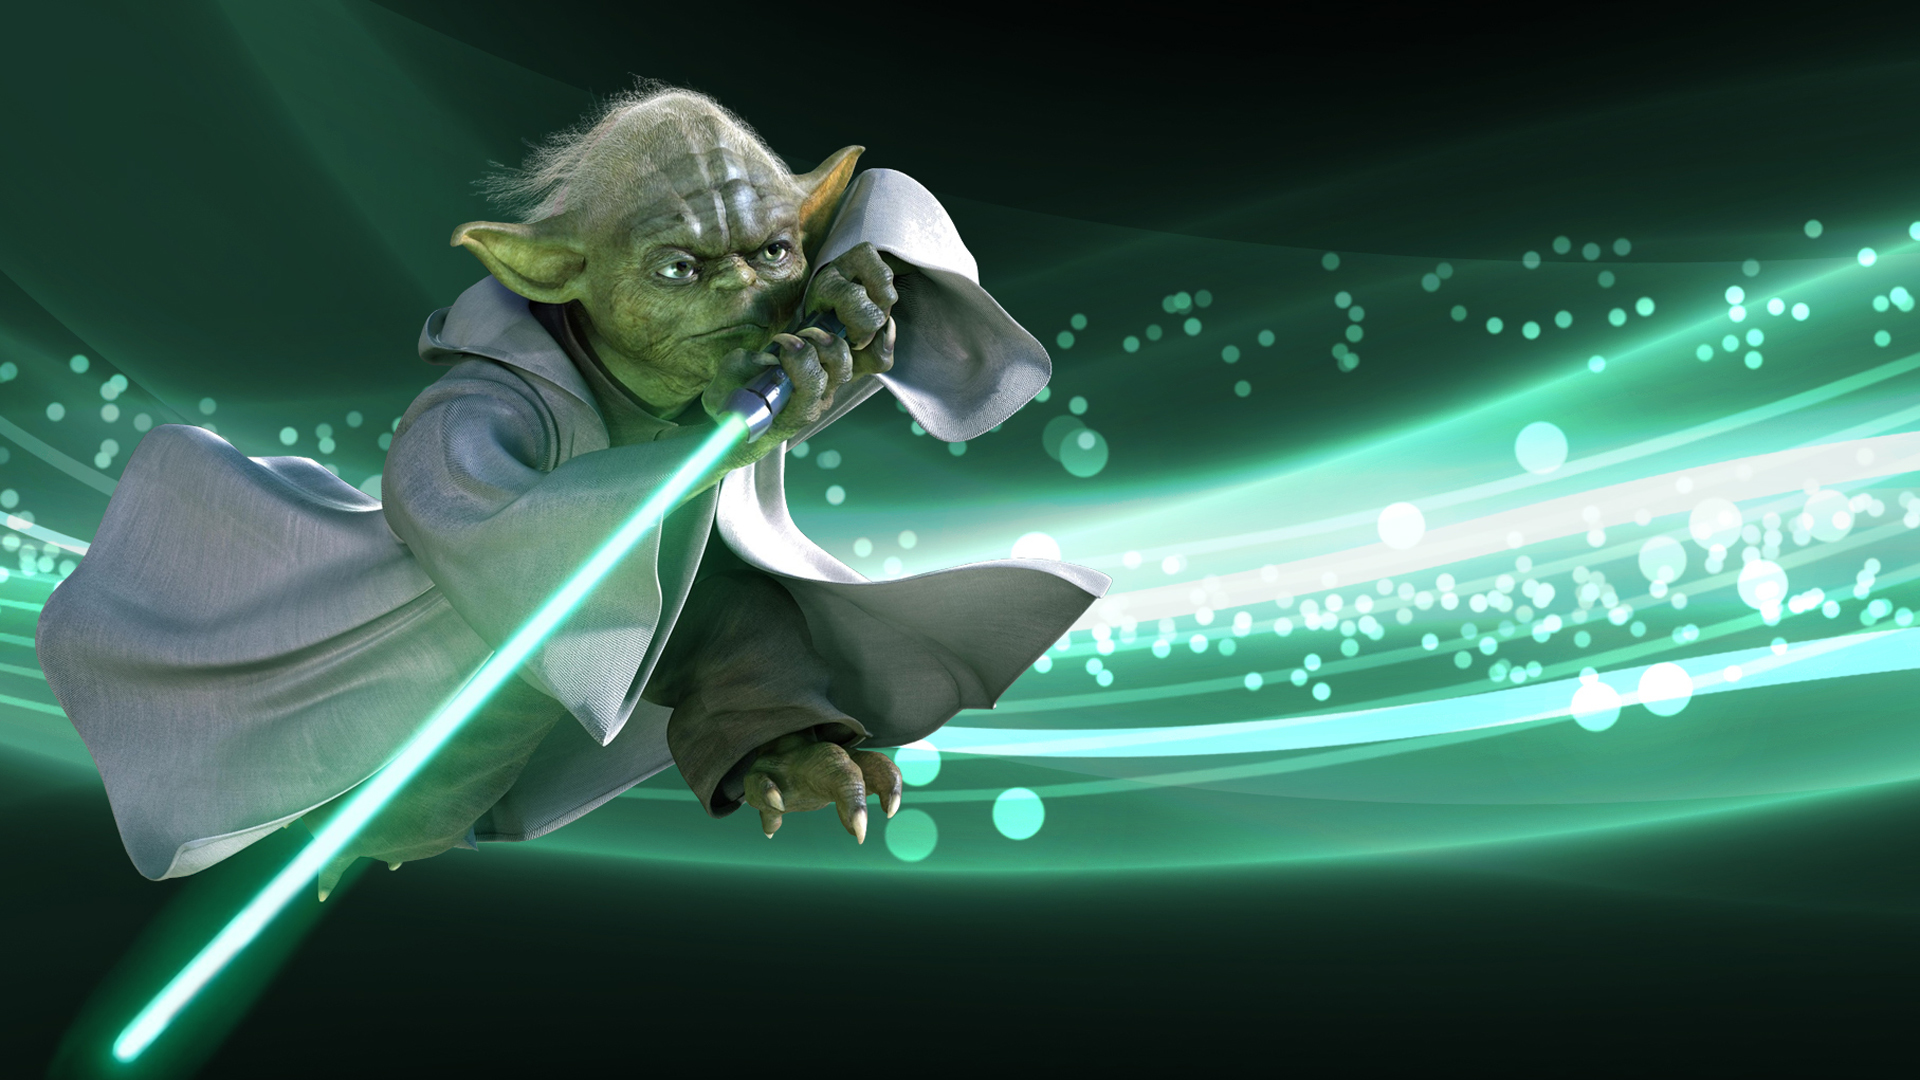 Free download Yoda Lightsaber HD Wallpaper Background Image [1920x1080] for your Desktop, Mobile & Tablet. Explore Star Wars Lightsaber Background. Star Wars Lightsaber Wallpaper, Star Wars Lightsaber Background, Star